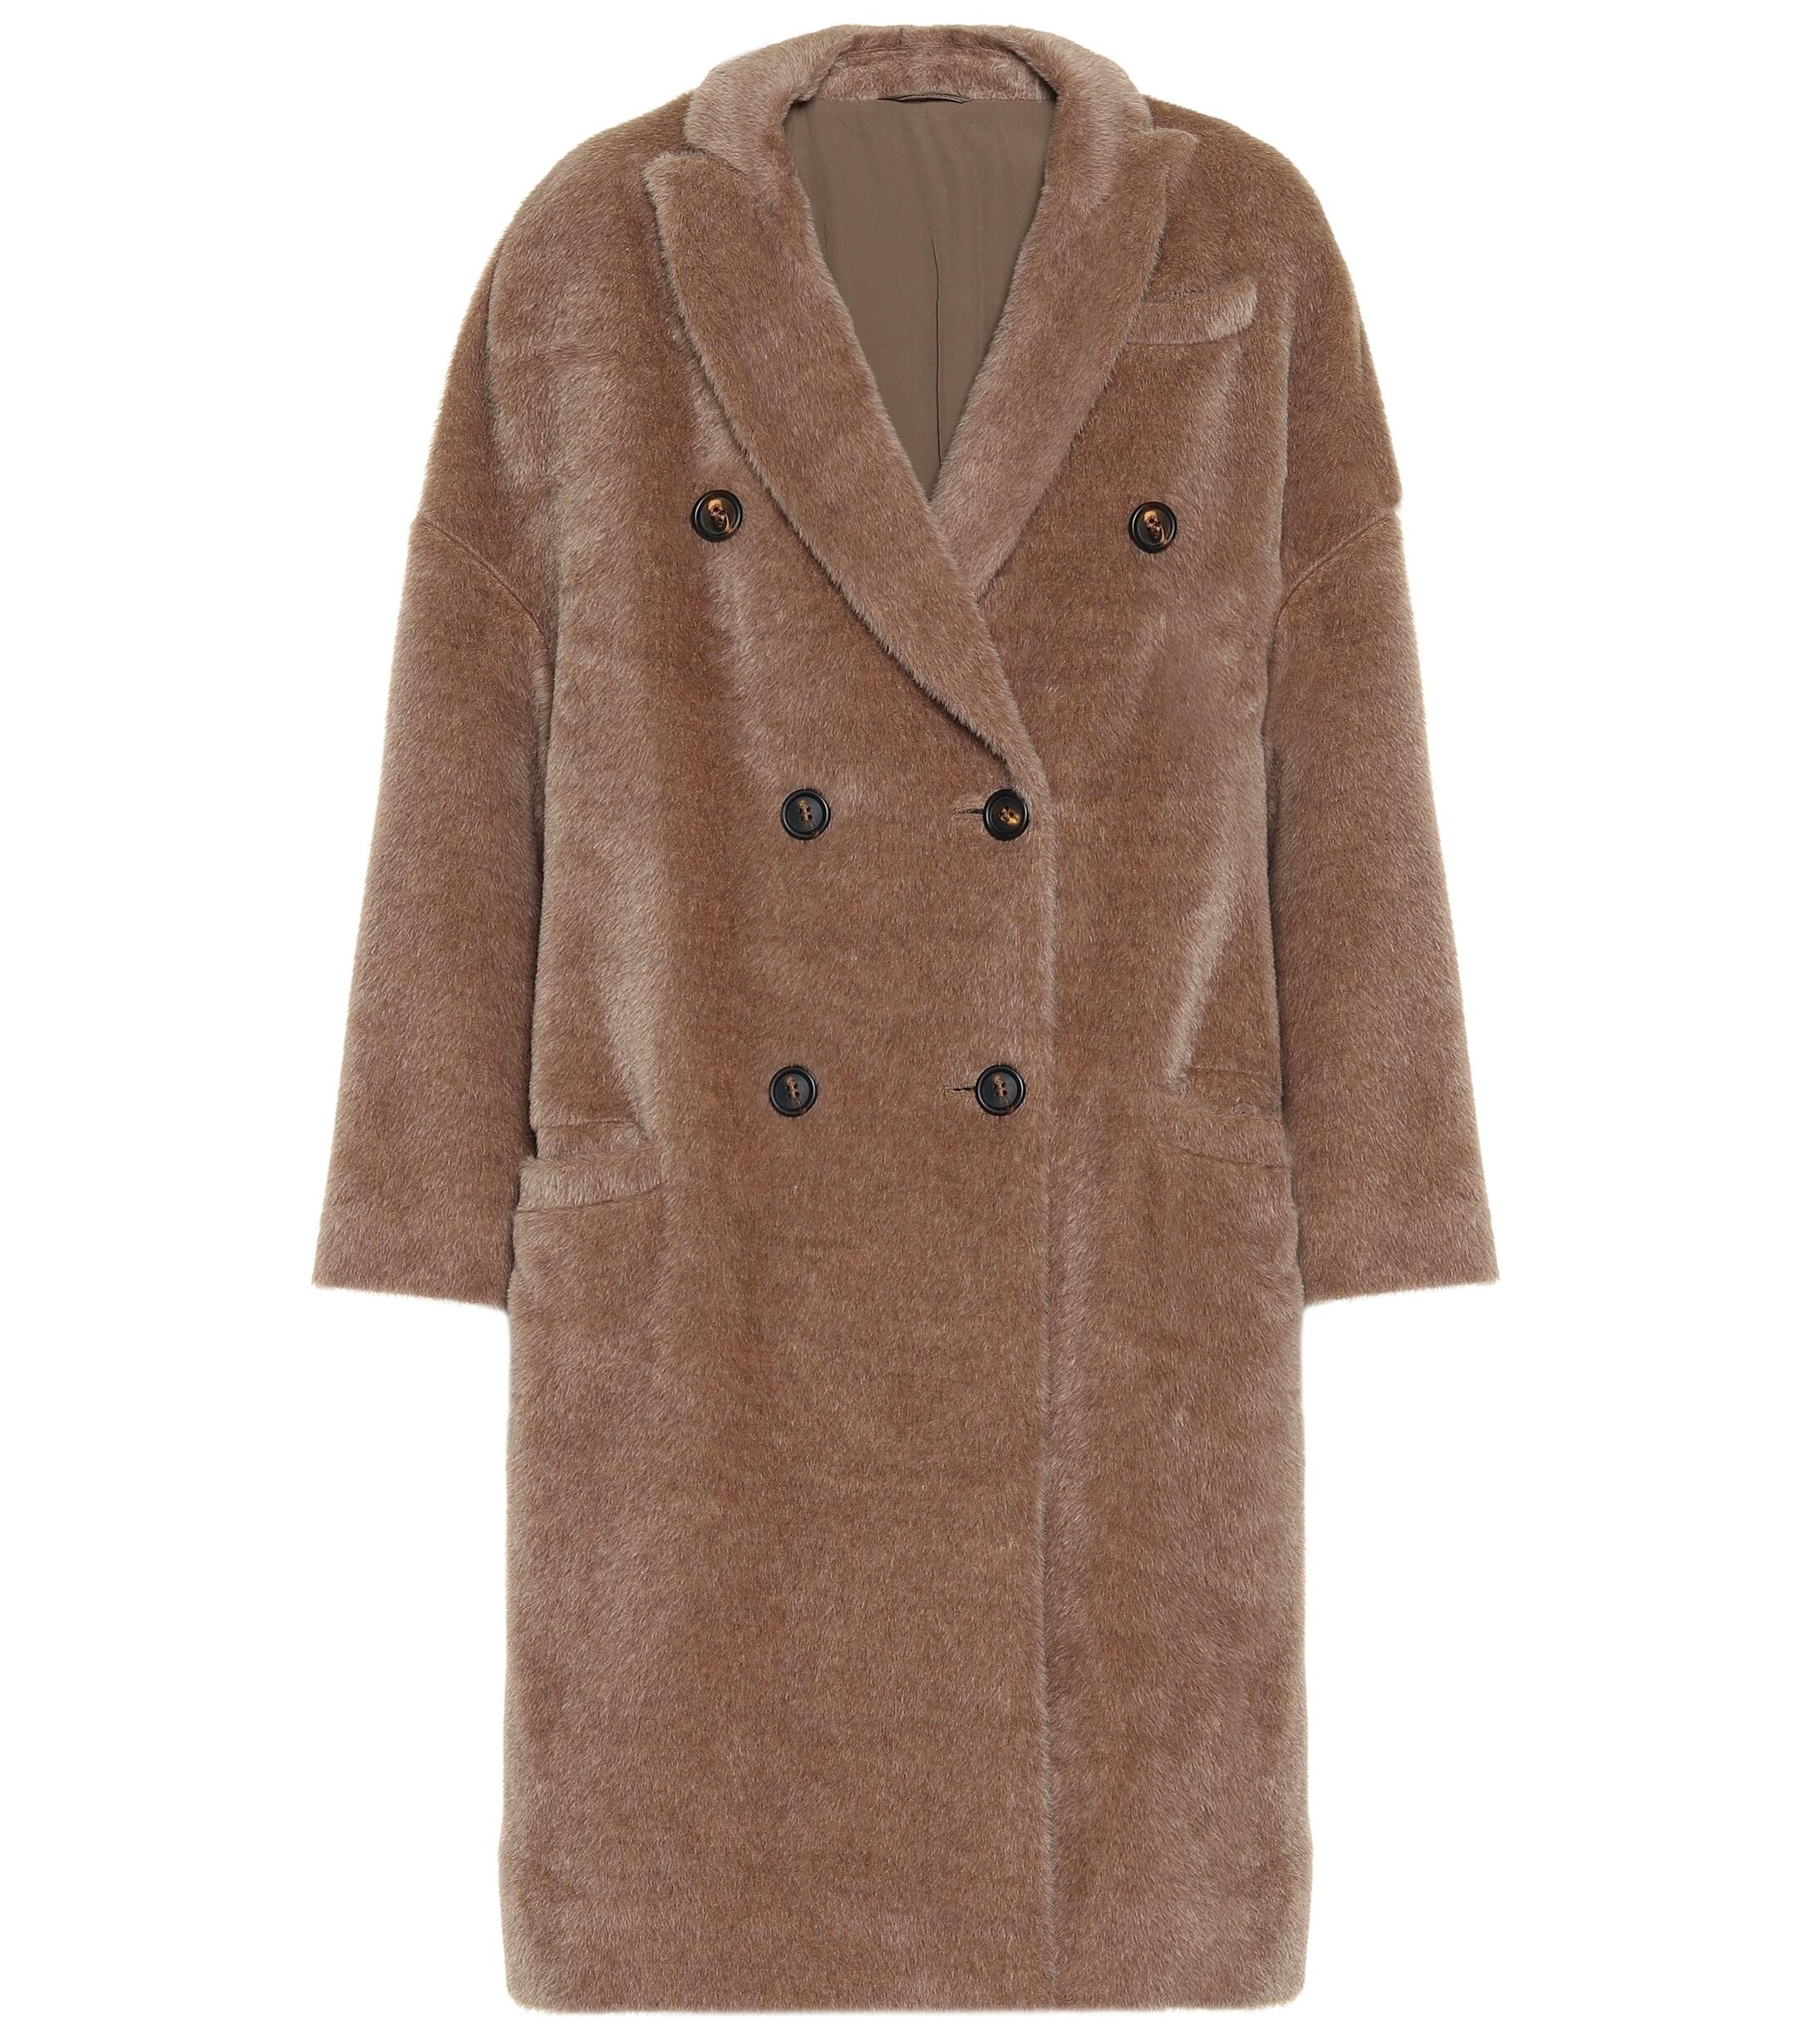 Brunello Cucinelli Alpaca And Wool Coat in Brown - Lyst